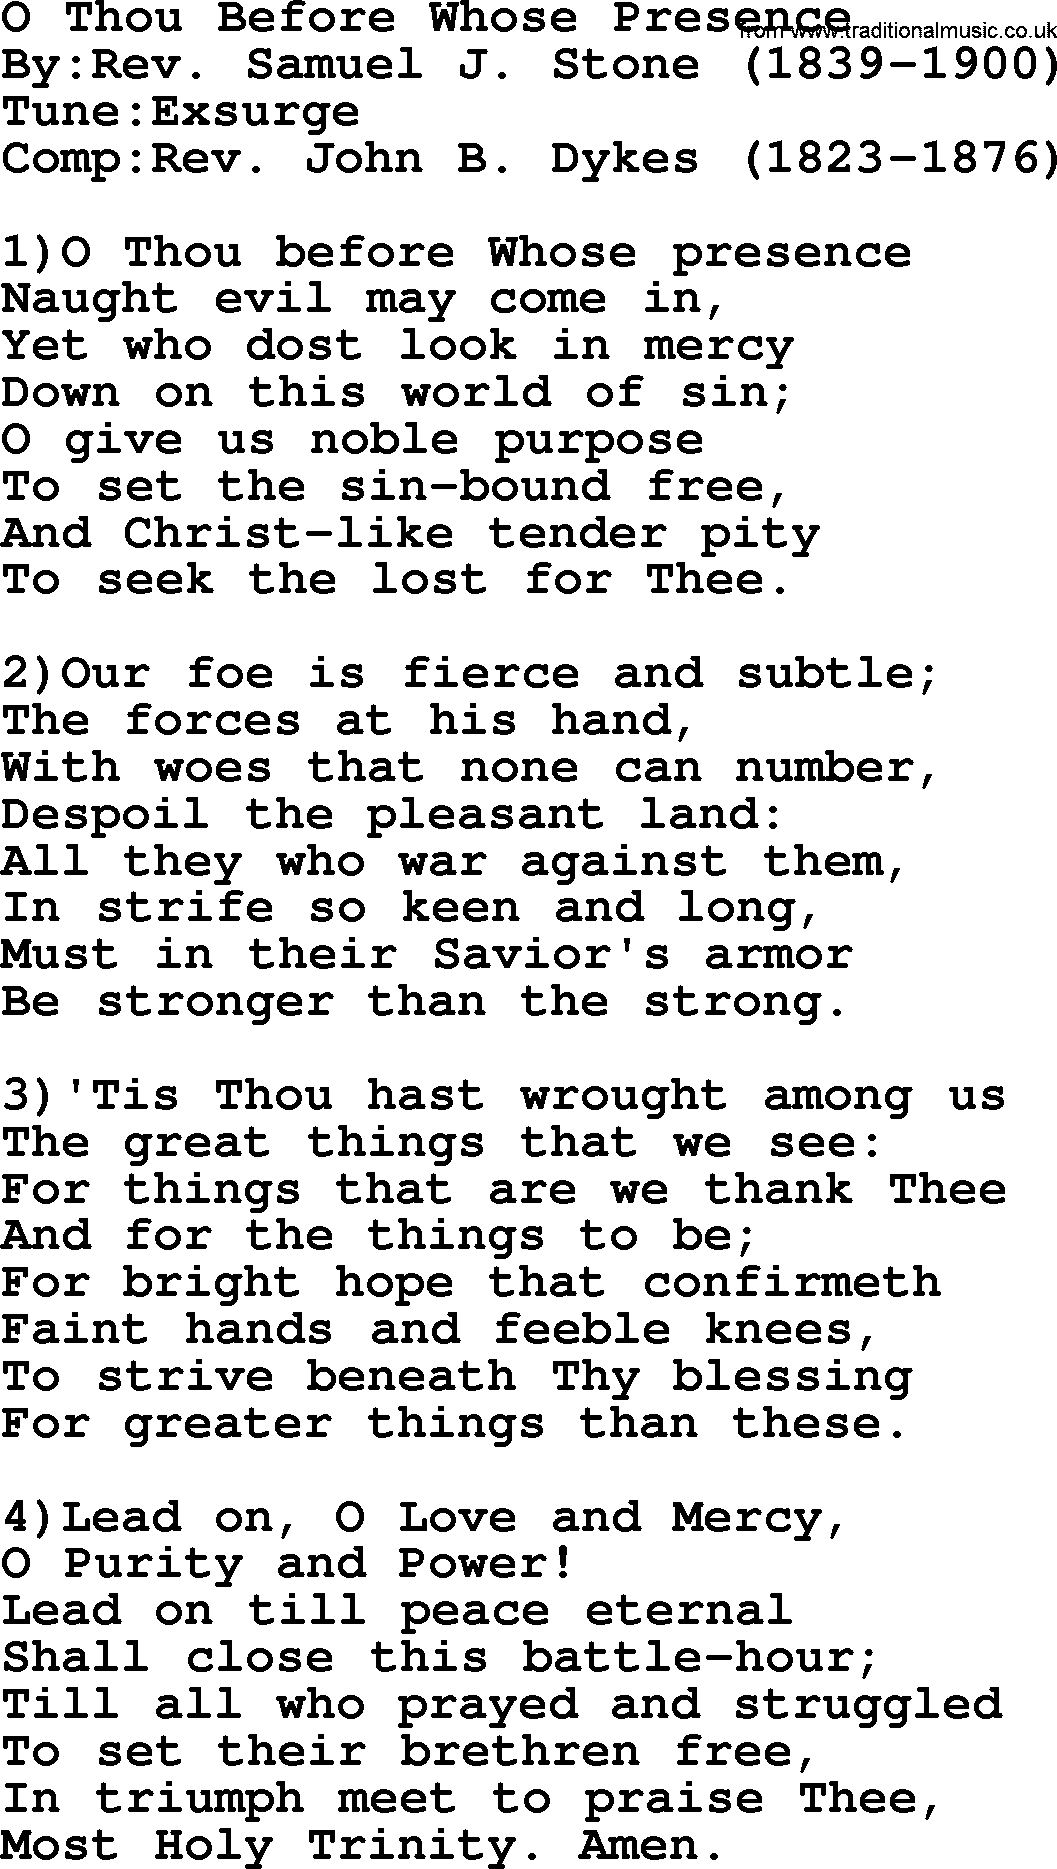 Methodist Hymn: O Thou Before Whose Presence, lyrics